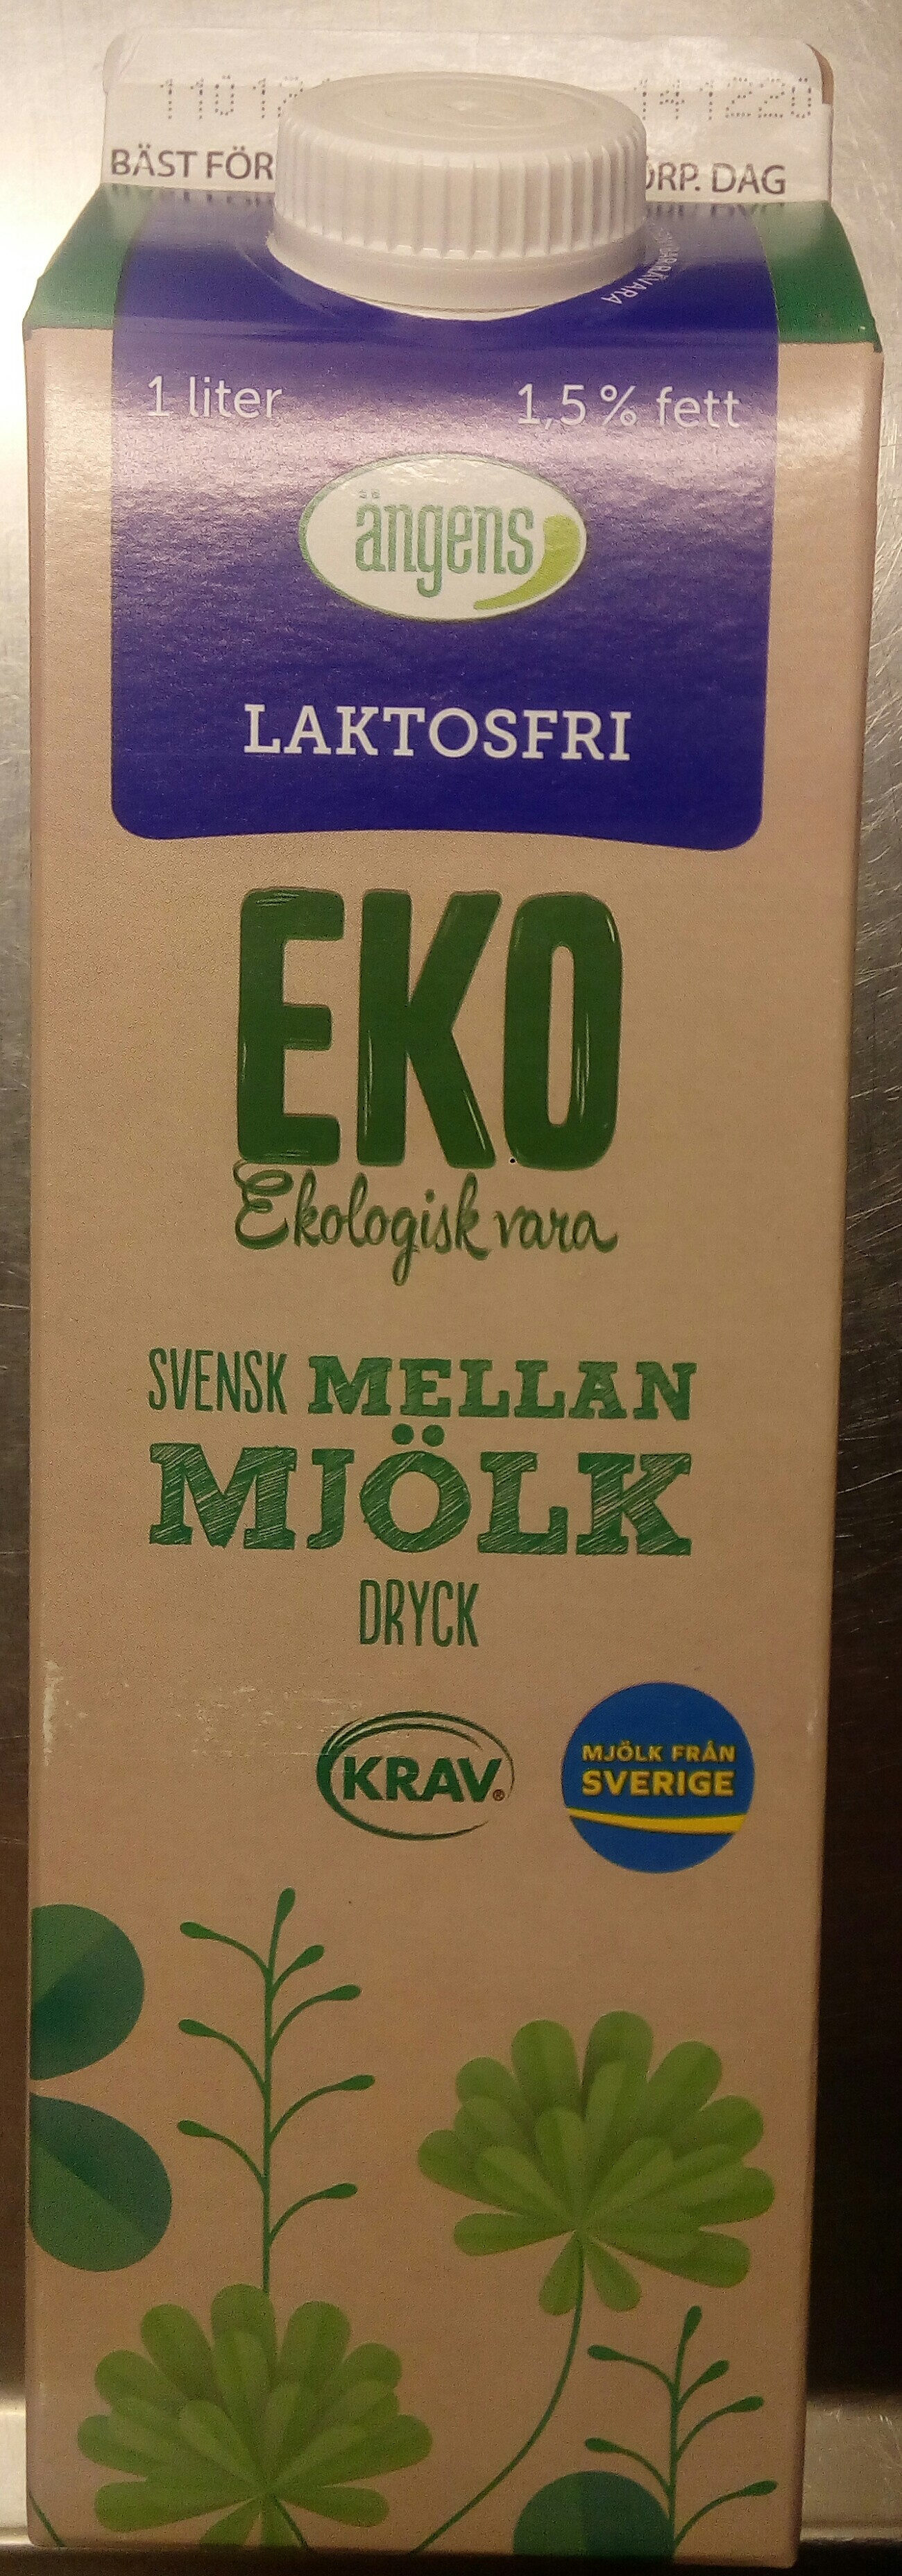 Ängens Laktosfri EKO Svensk mellanmjölkdryck - Produkt - sv